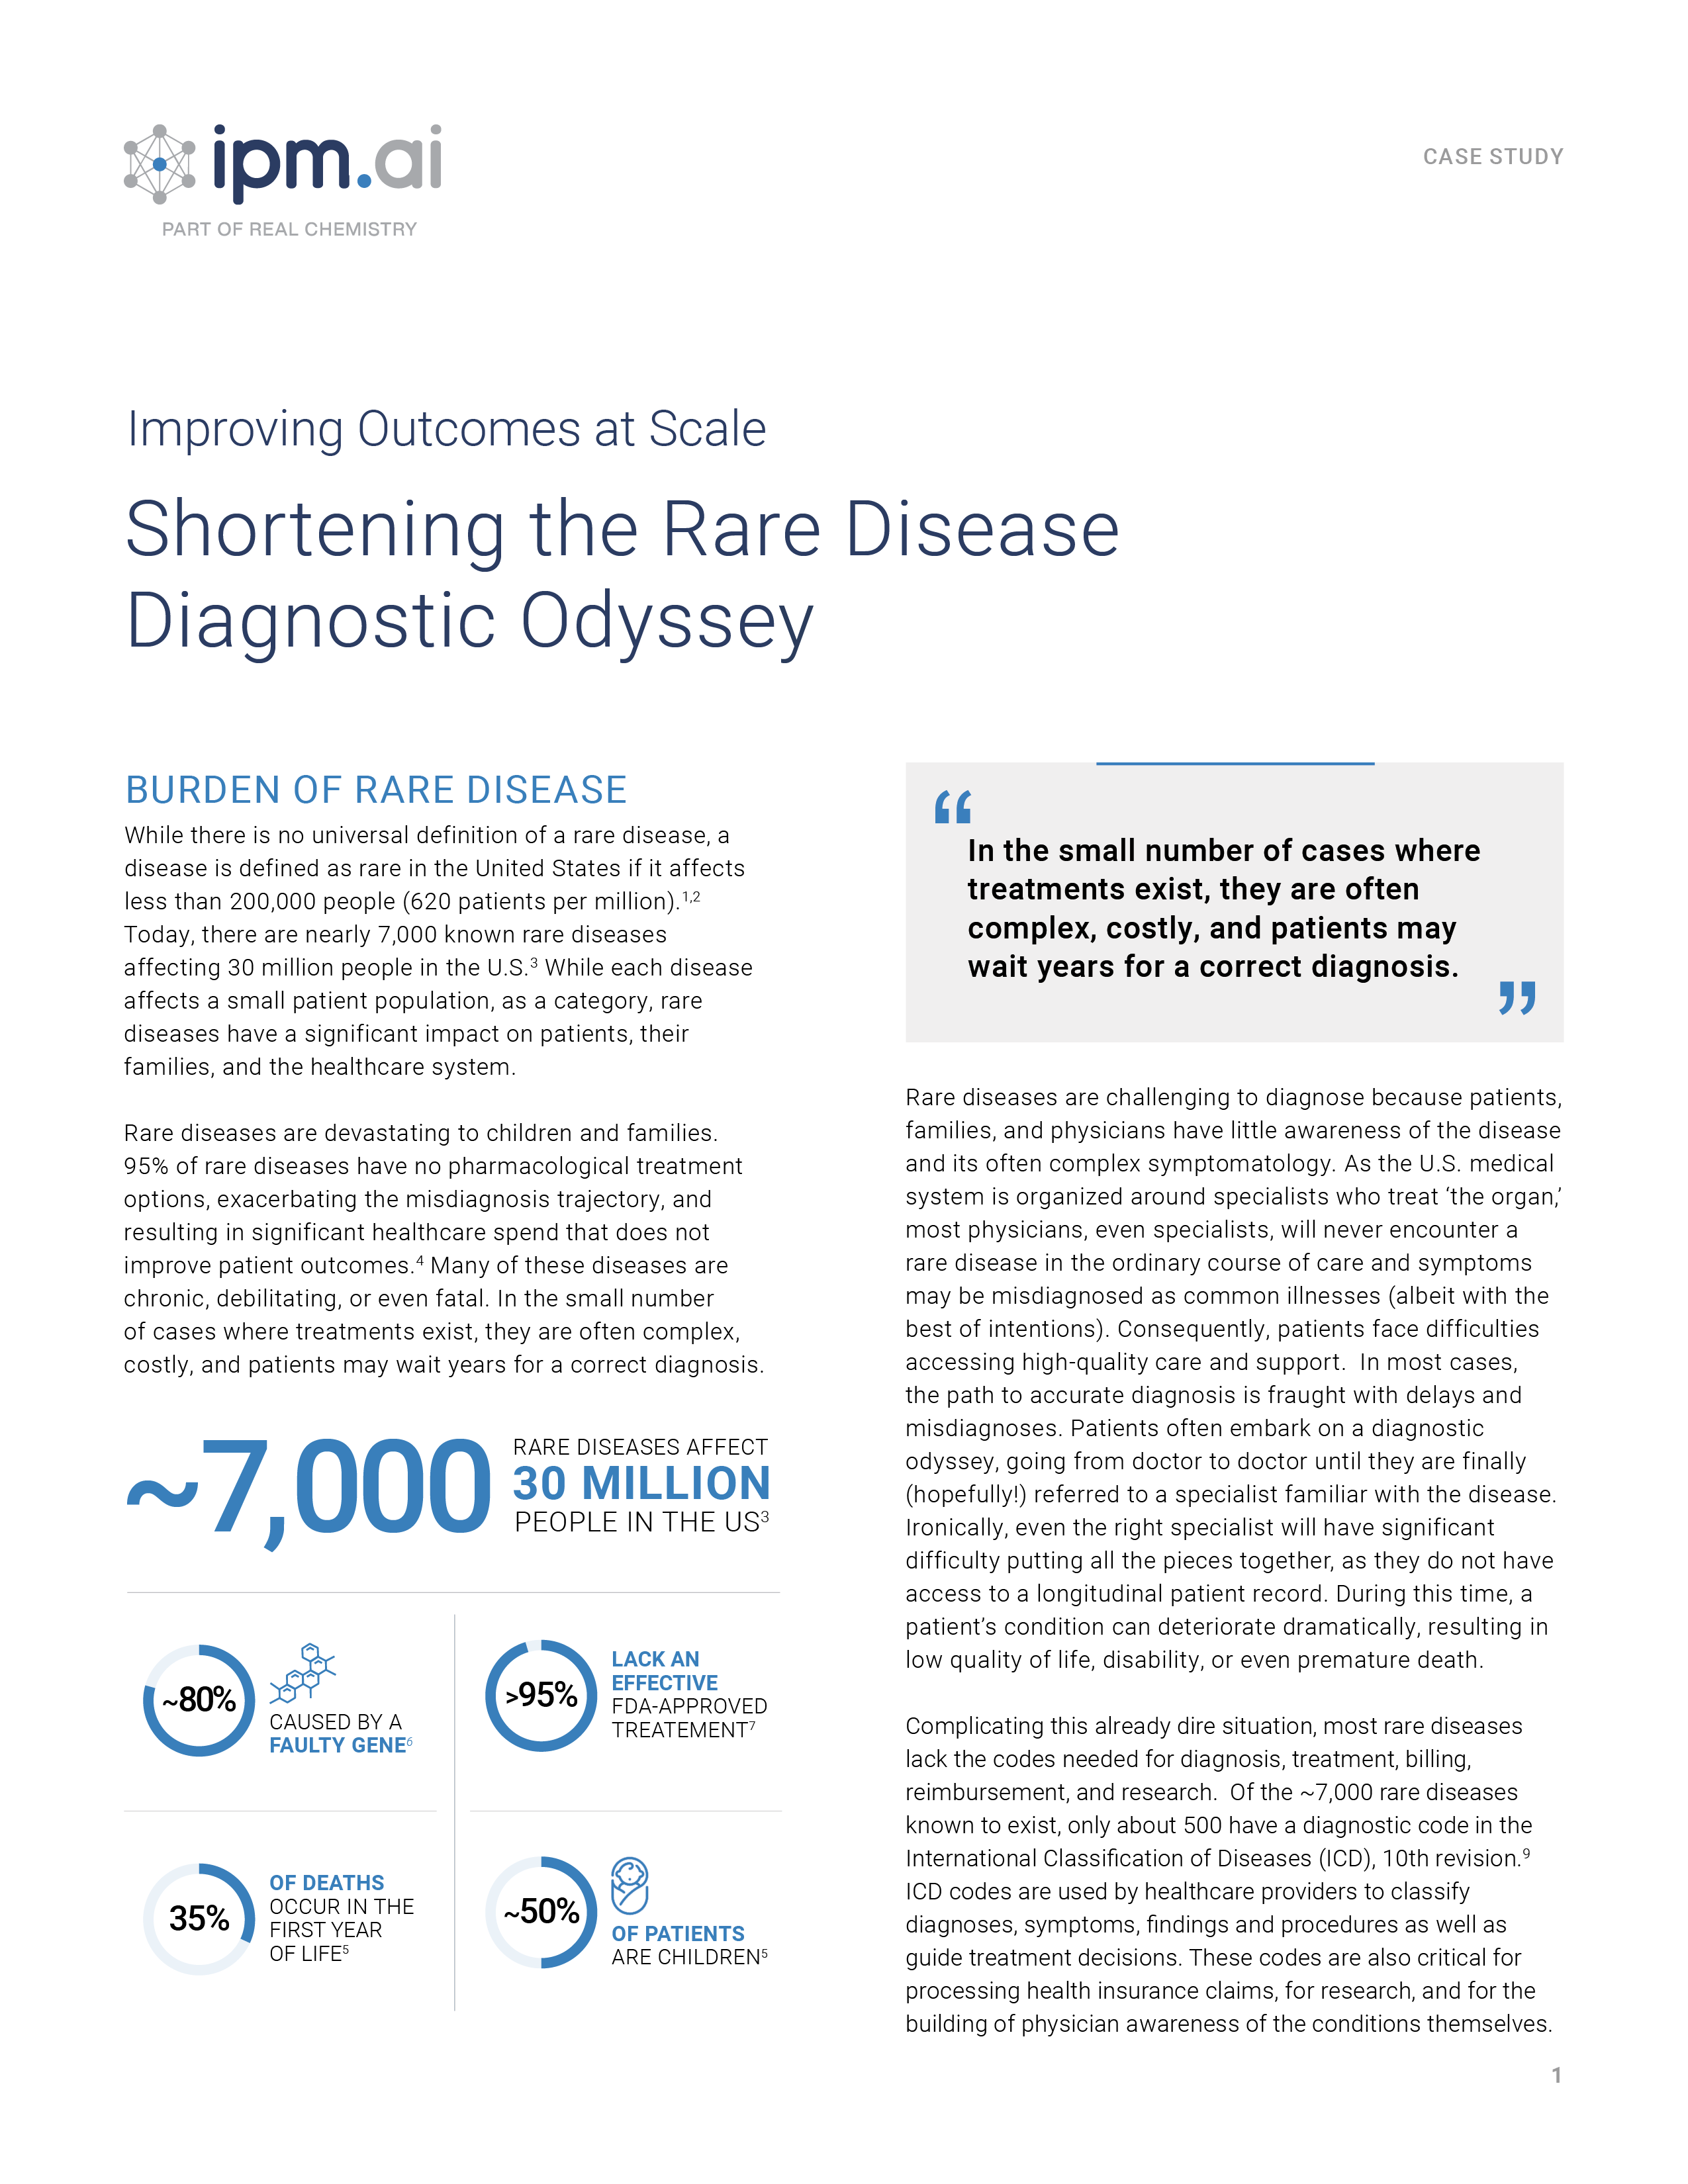 Shortening the Rare Disease_IPM